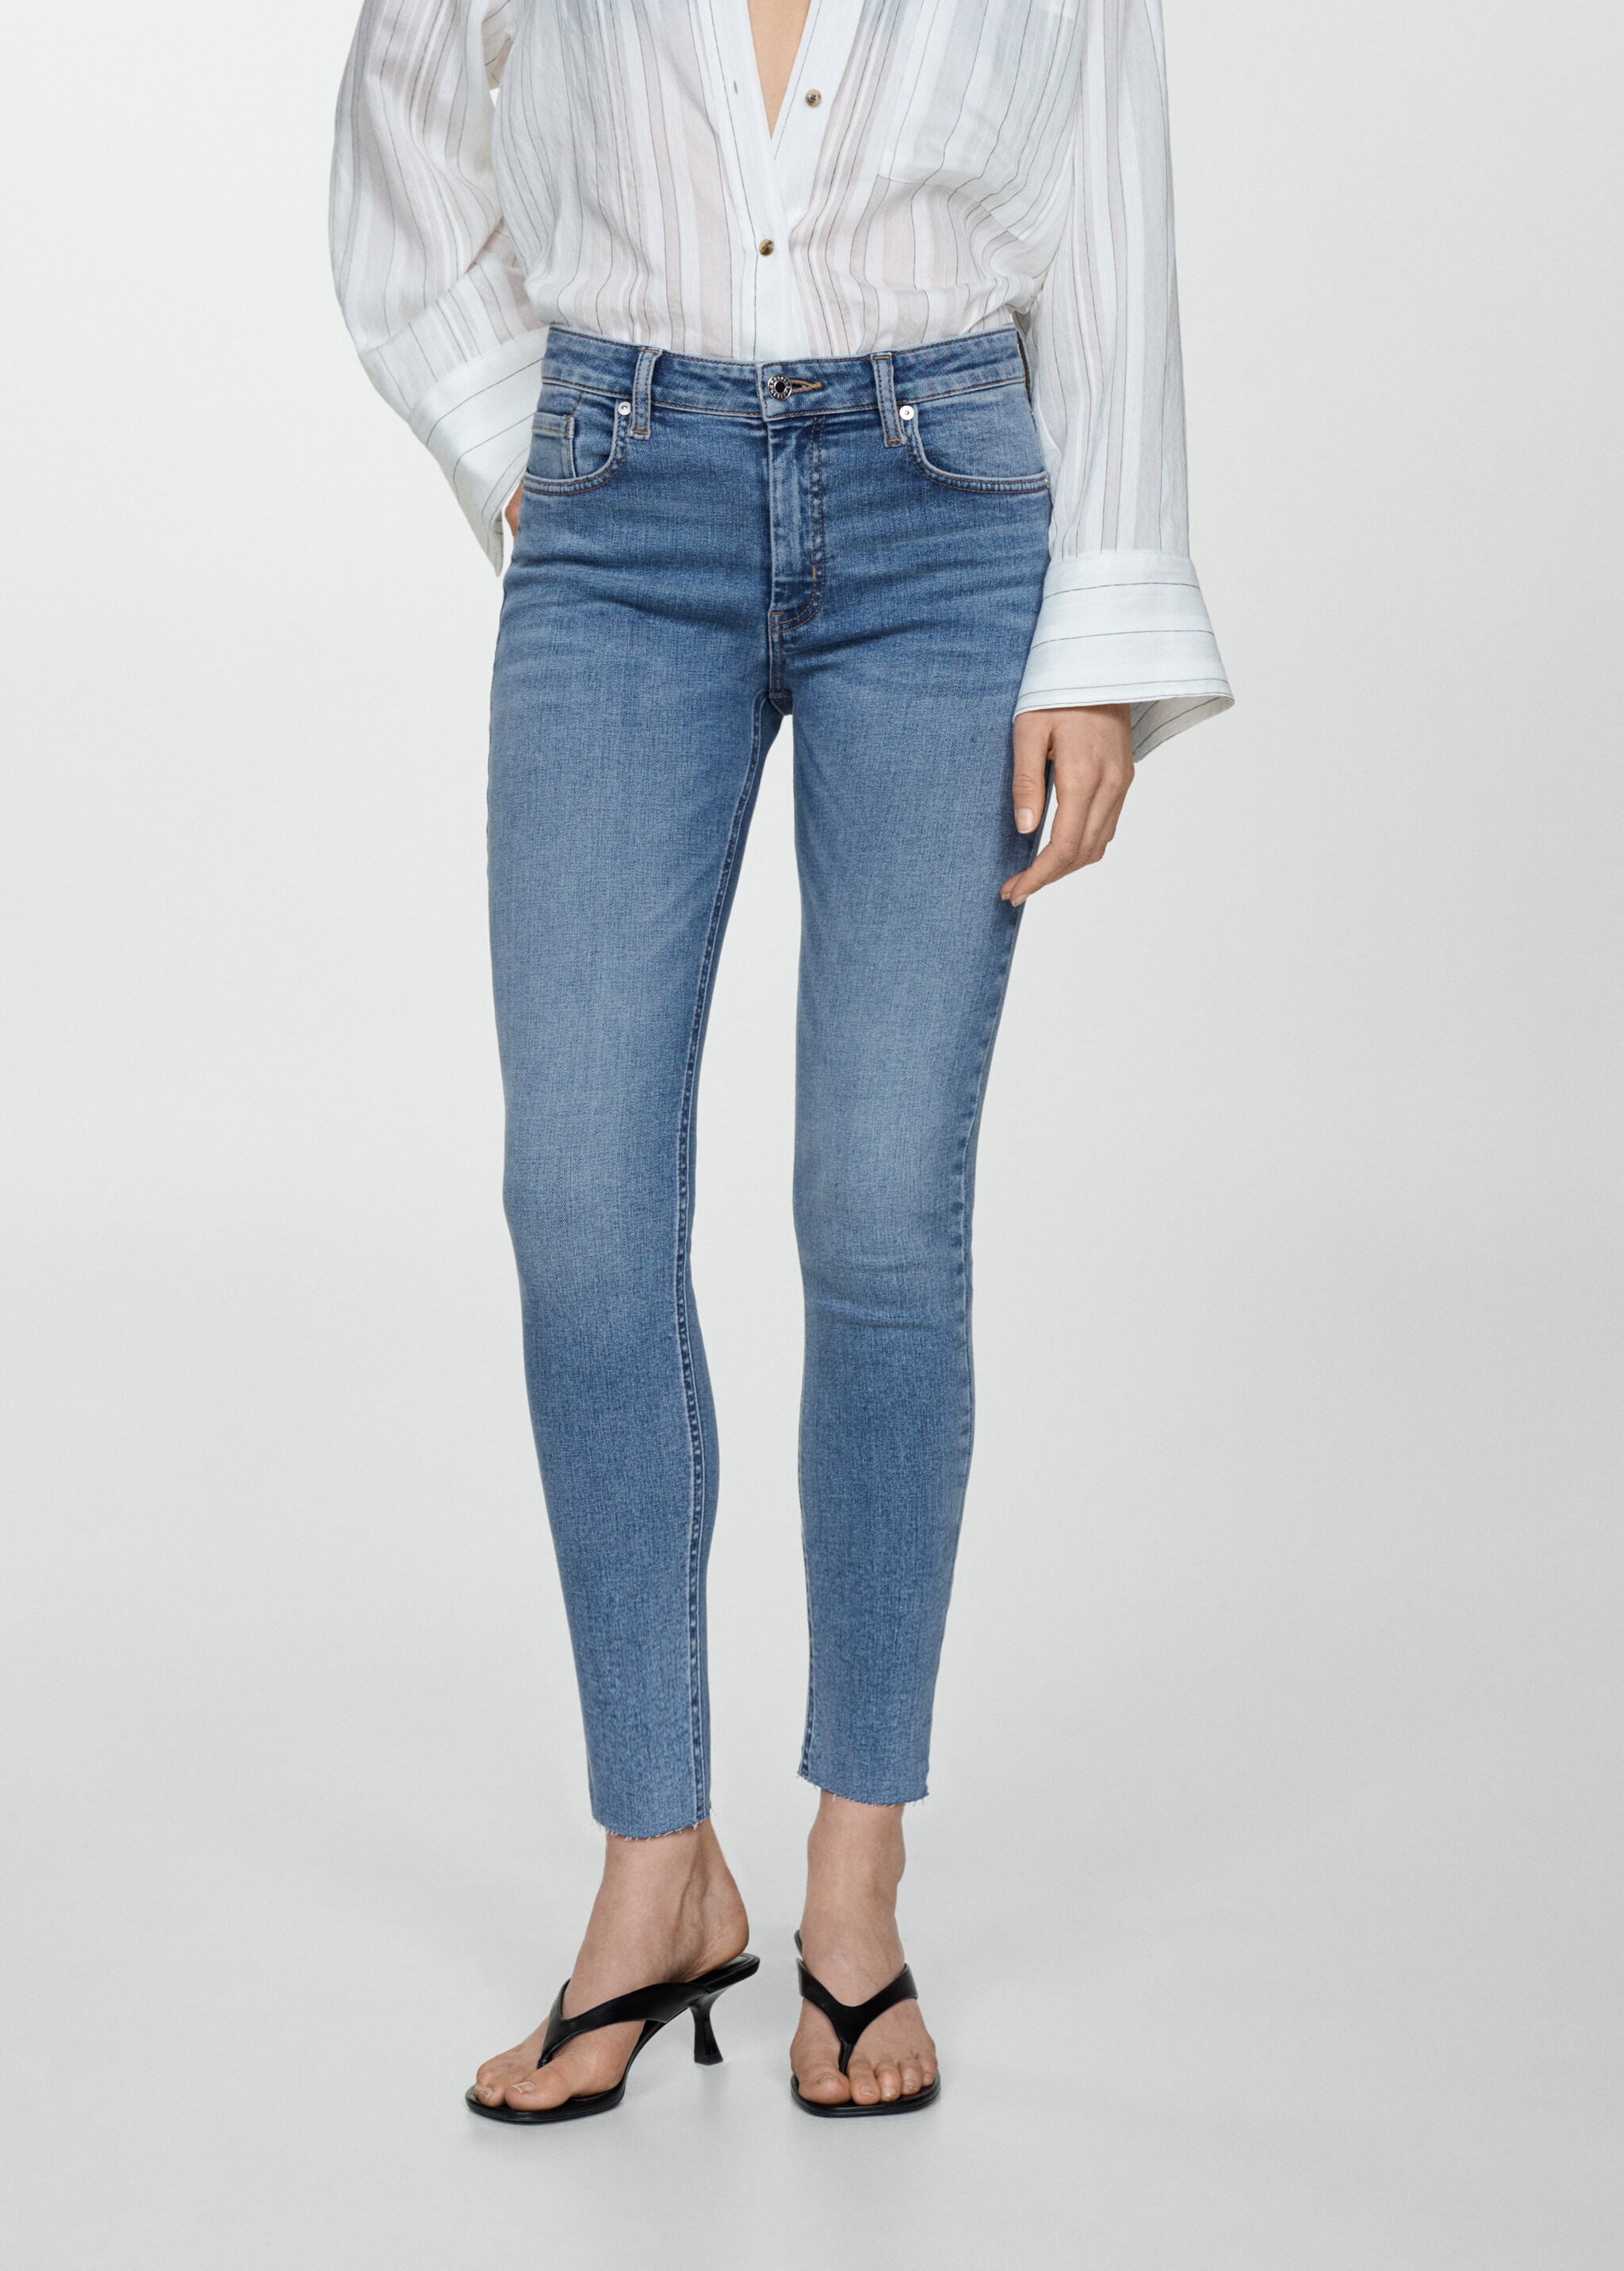 Skinny cropped jeans - Medium plane